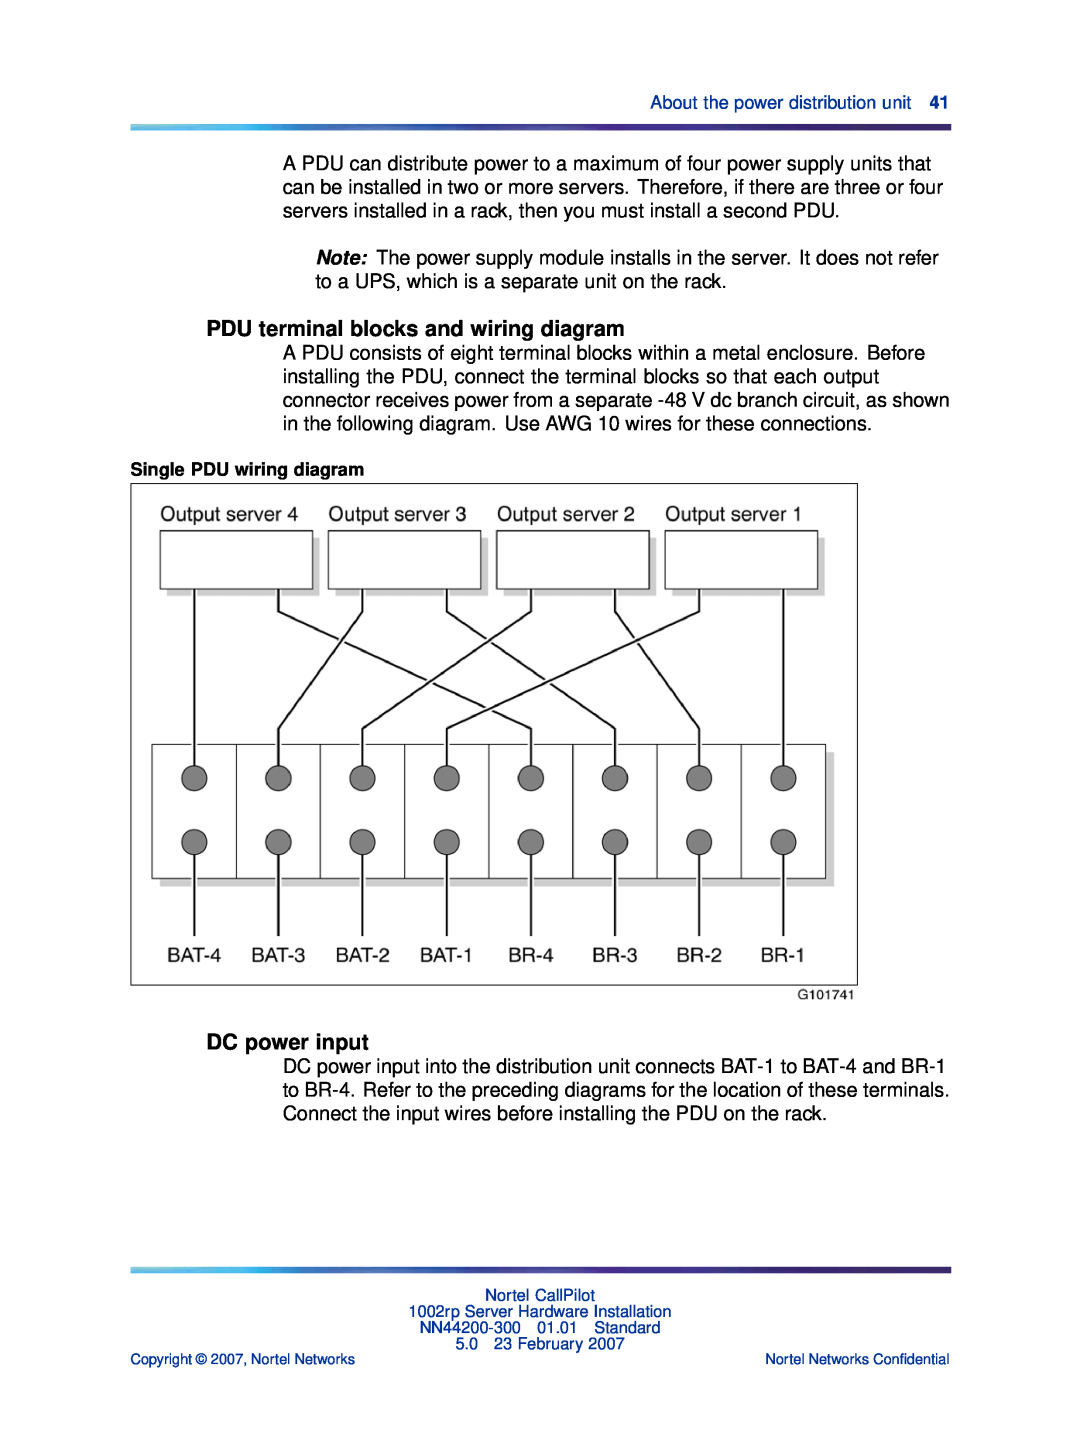 Nortel Networks NN44200-300 manual PDU terminal blocks and wiring diagram, DC power input, Single PDU wiring diagram 